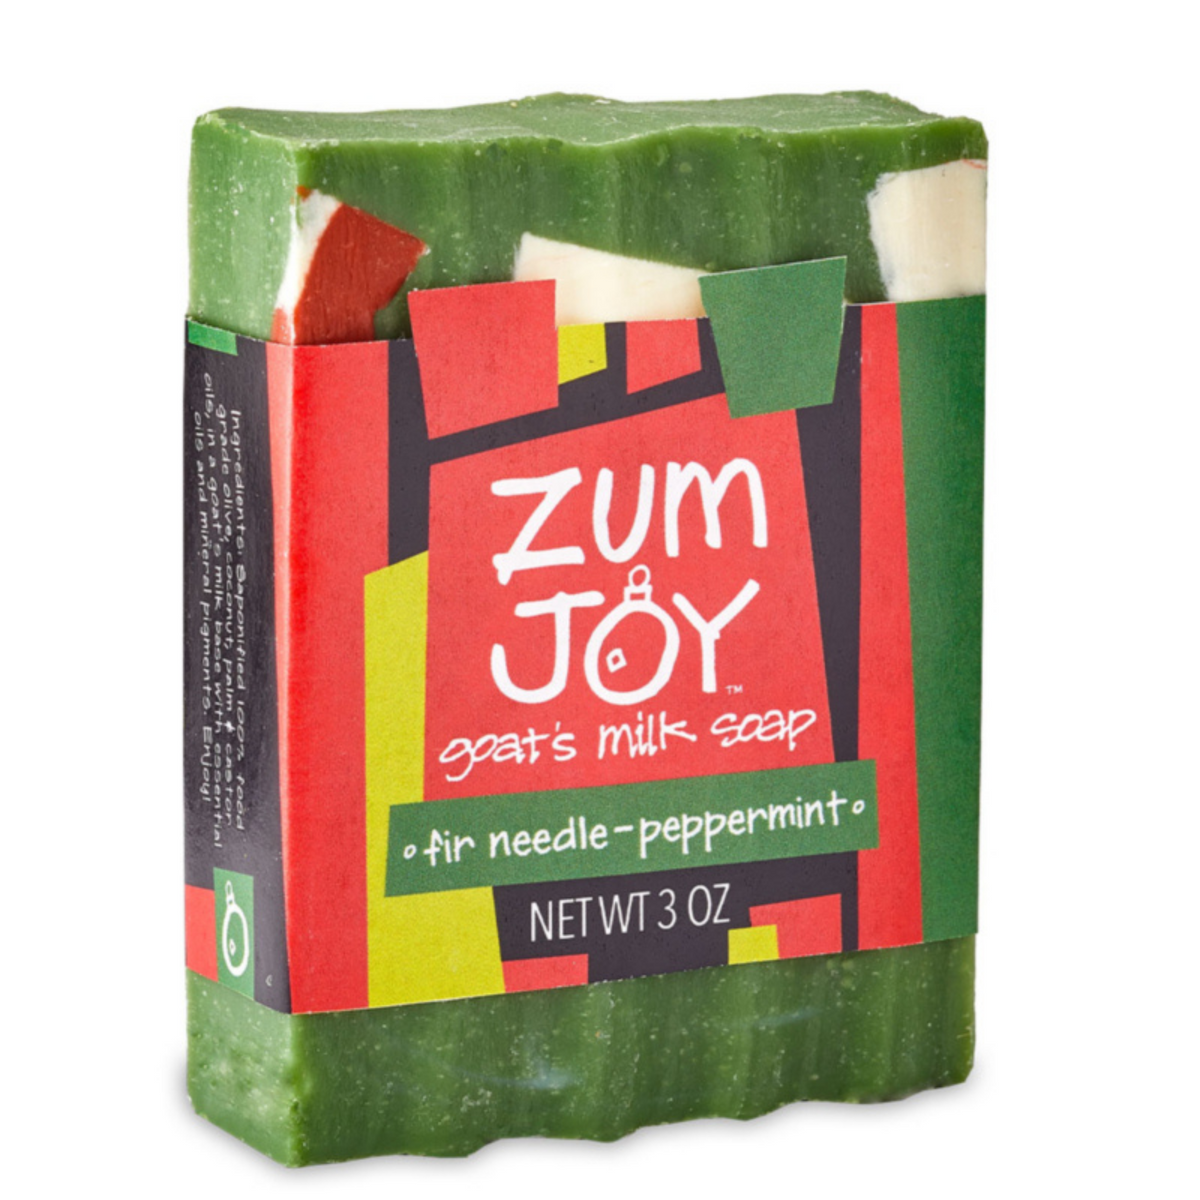 Primary Image of Zum Joy Bar Fir Needle-Peppermint